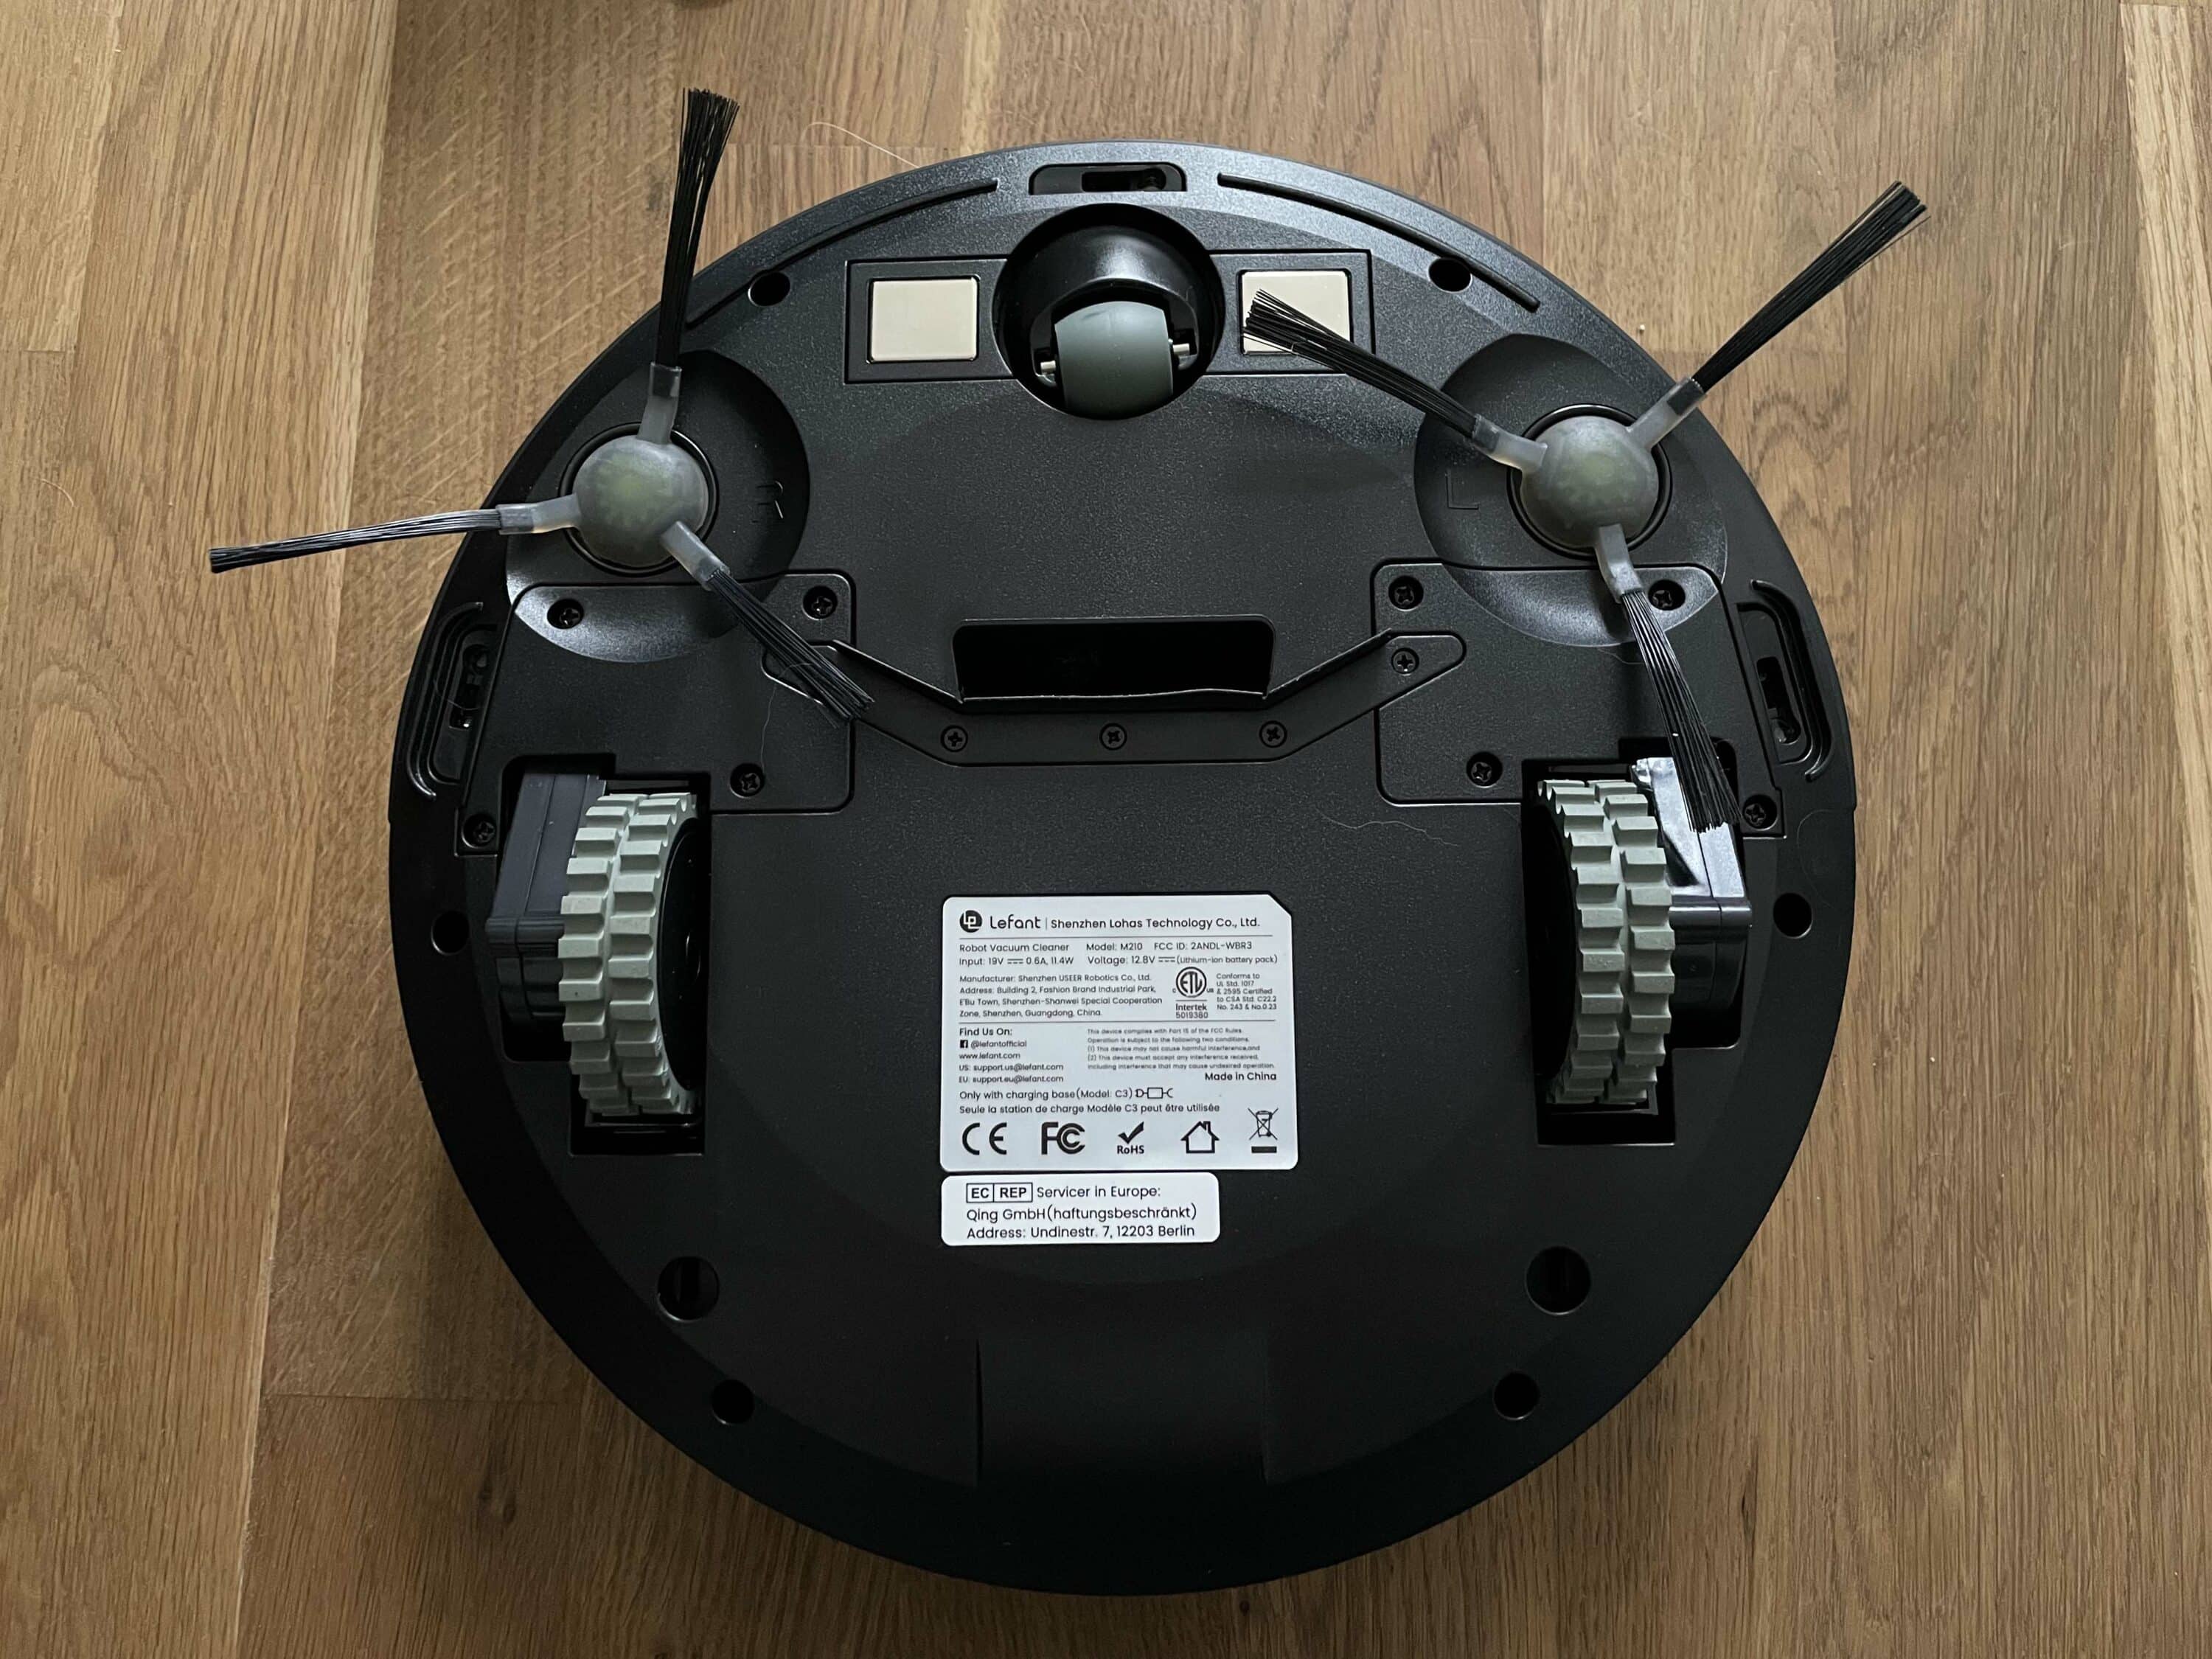 M210 Pro test: vacuum robot without